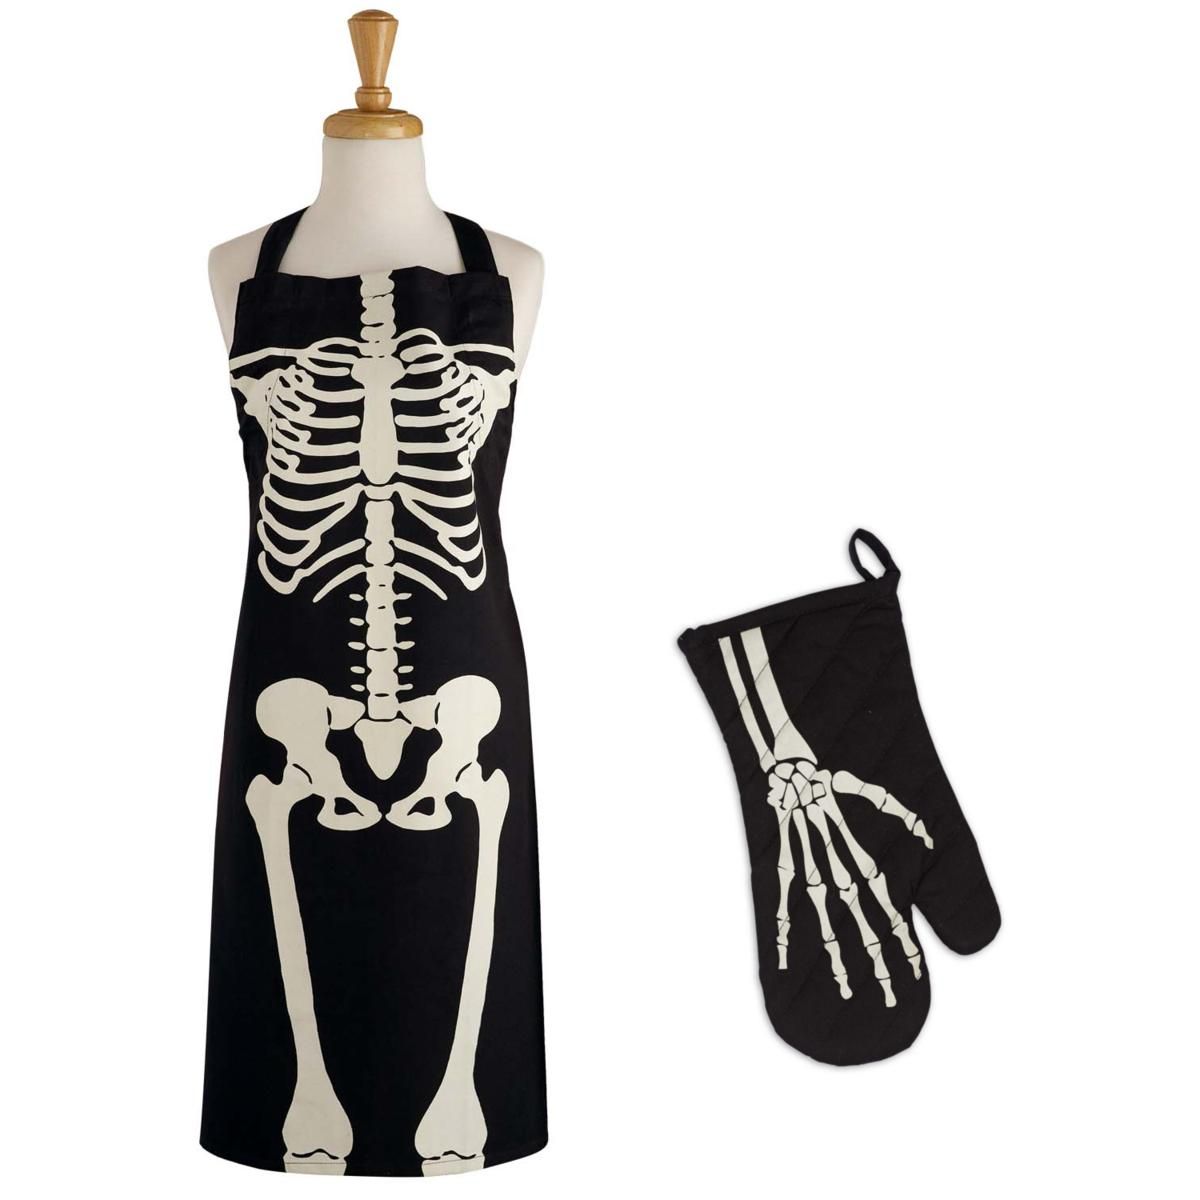 Design Imports Skeleton Apron & Oven Mitt Set - 9725438 | HSN | HSN